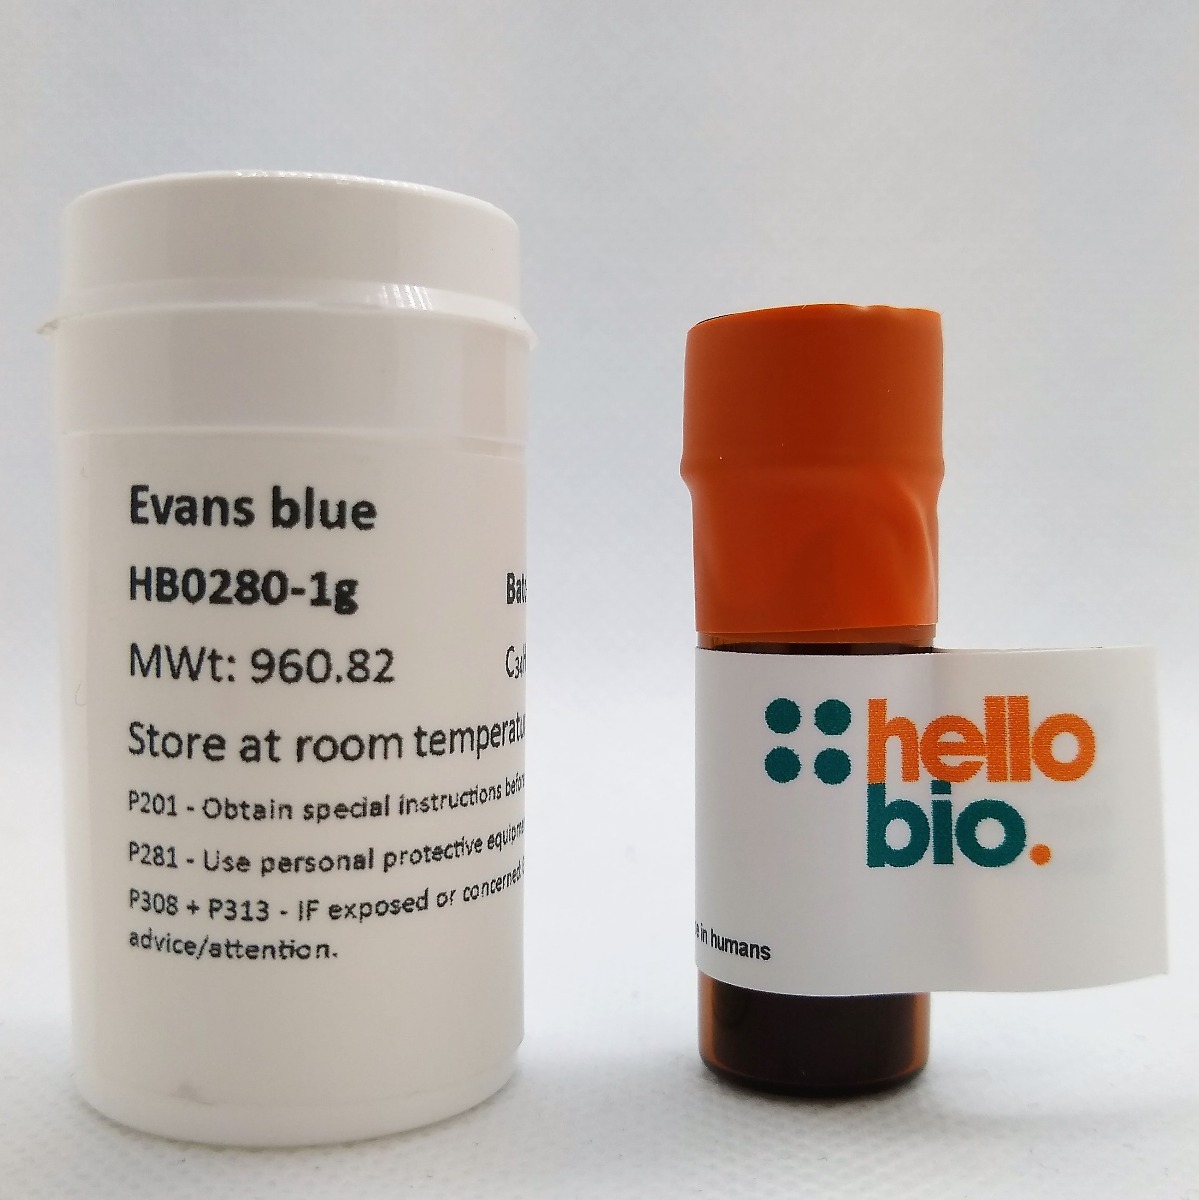 Evans blue product vial image | Hello Bio